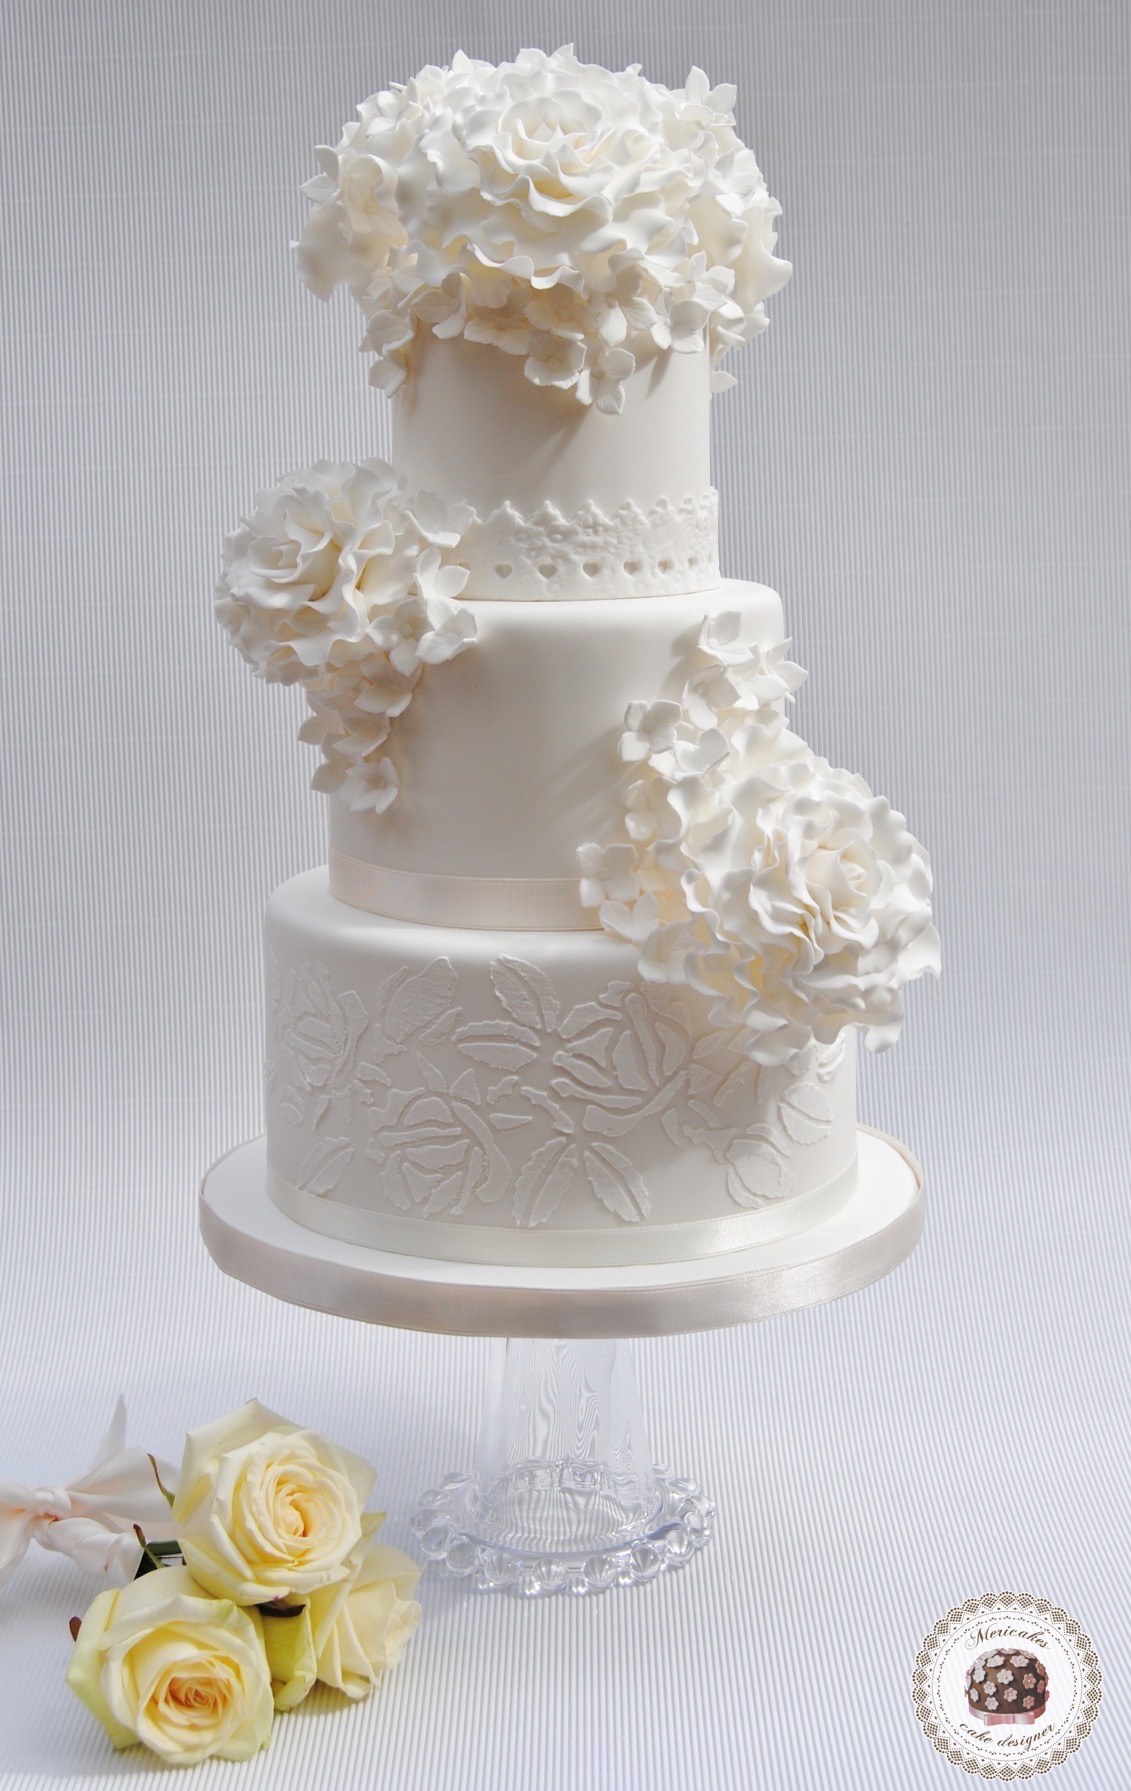 mericakes-tarta-de-boda-wedding-cake-tartas-decoradas-tartas-barcelona-pastel-fondant-rosas-flores-de-azucar-sugarflowers-sugarcraft-boda-spain-weddings-1